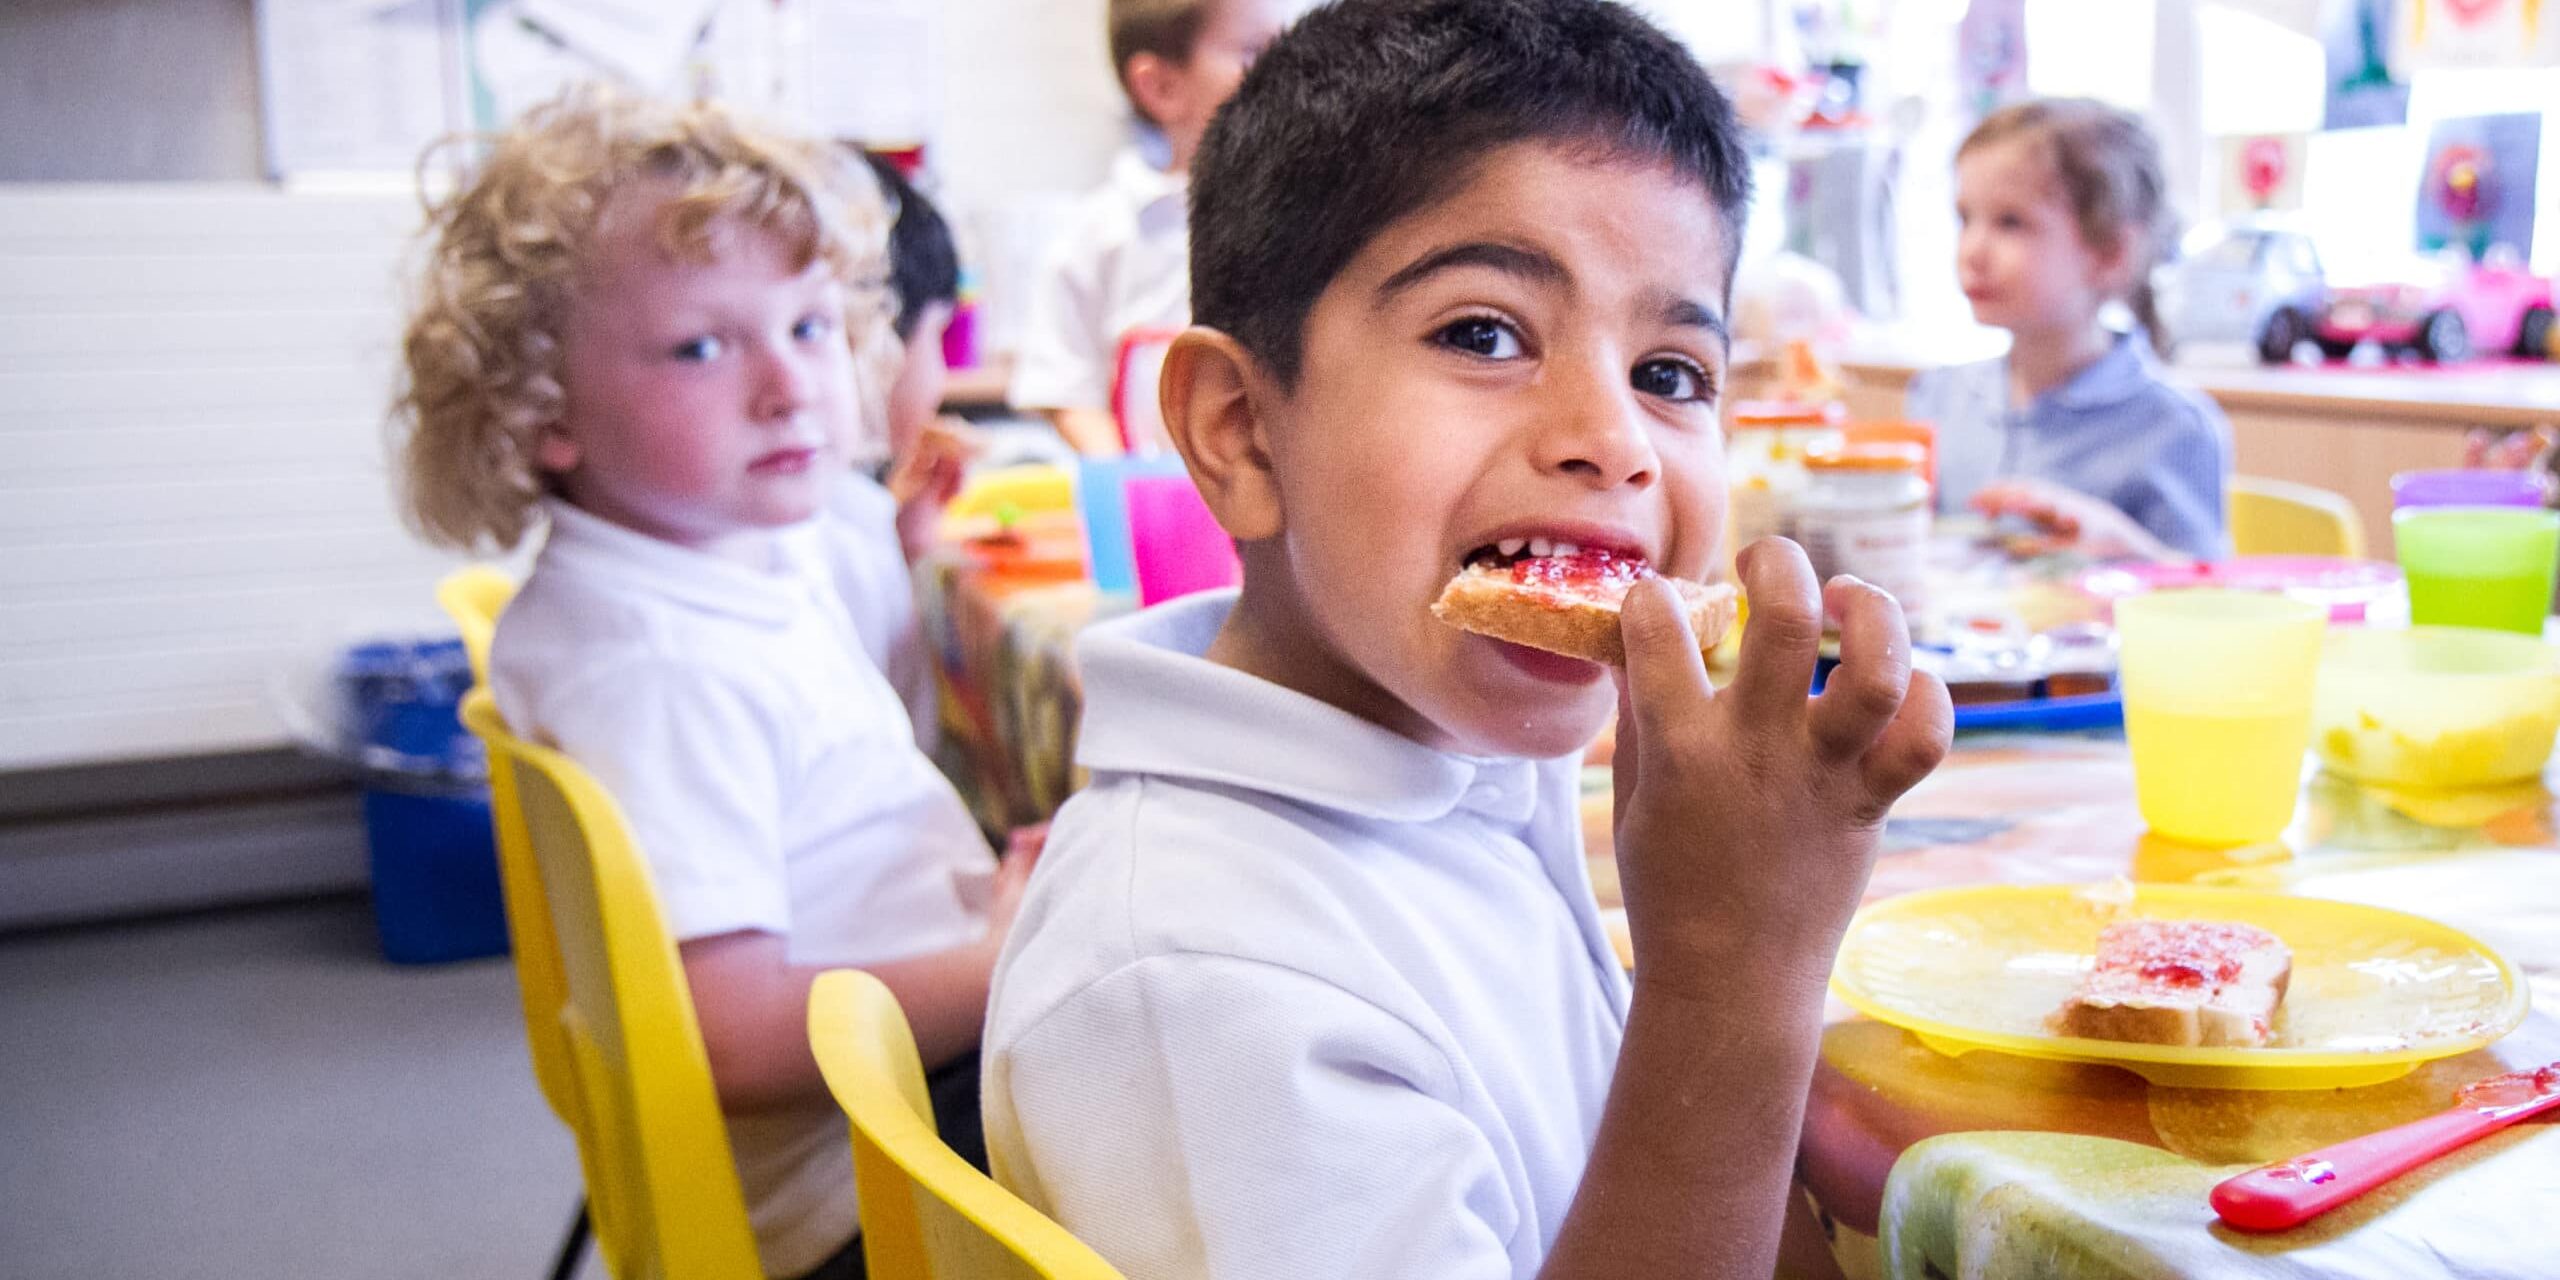 School children eating in a nurture room